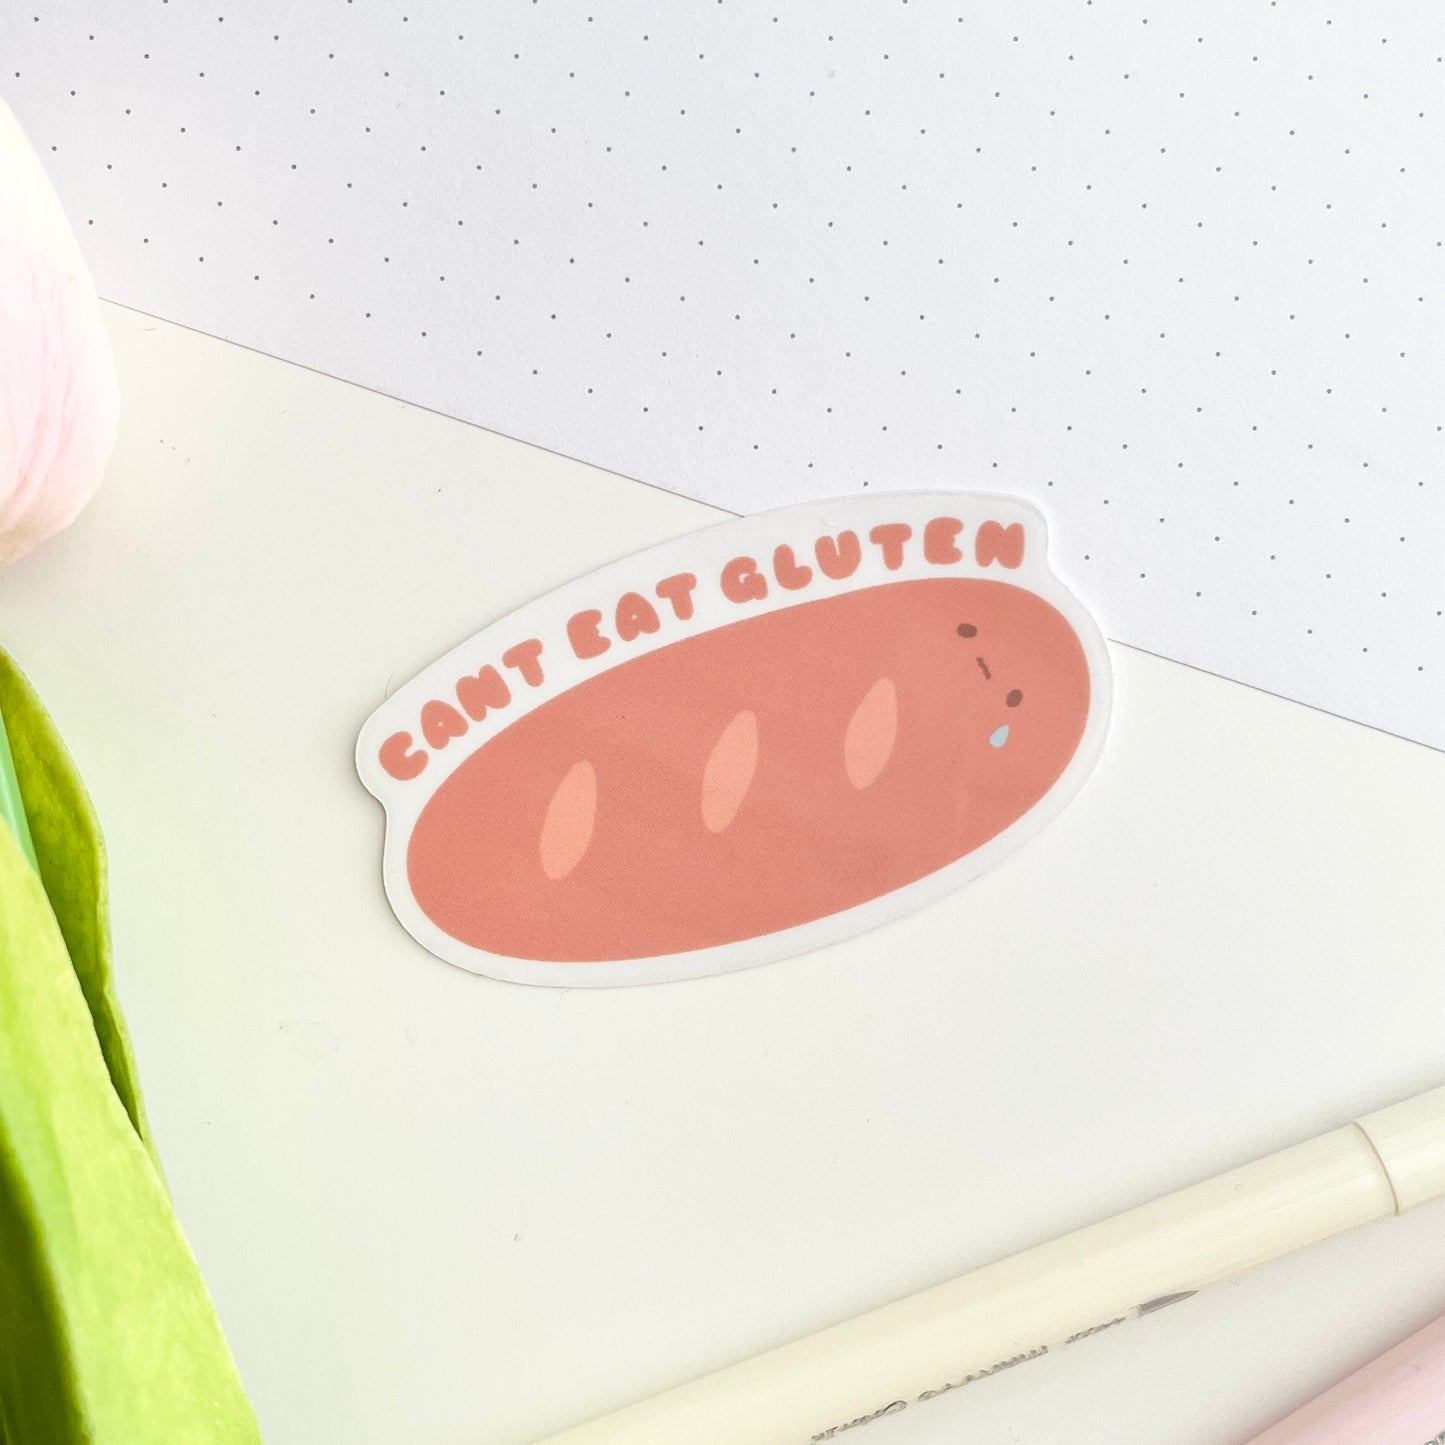 Can't Eat Gluten Clear Vinyl Sticker